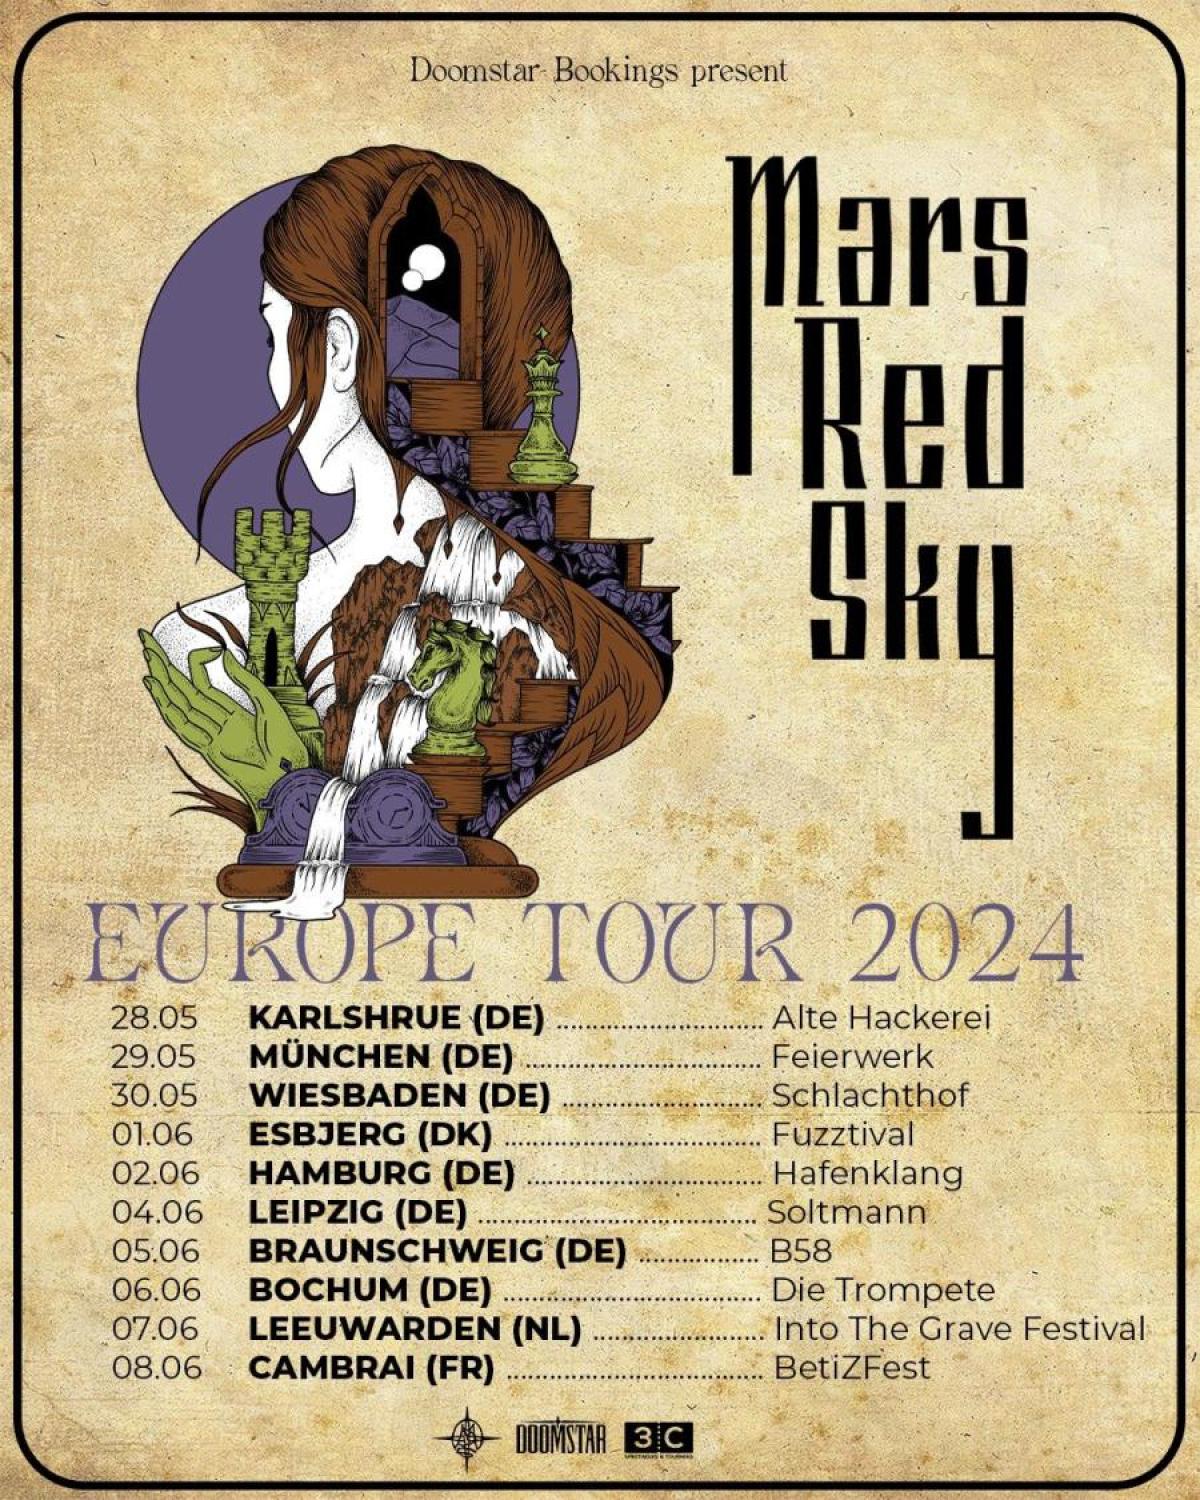 Billets Mars Red Sky - European Tour 2024 (Hafenklang - Hambourg)